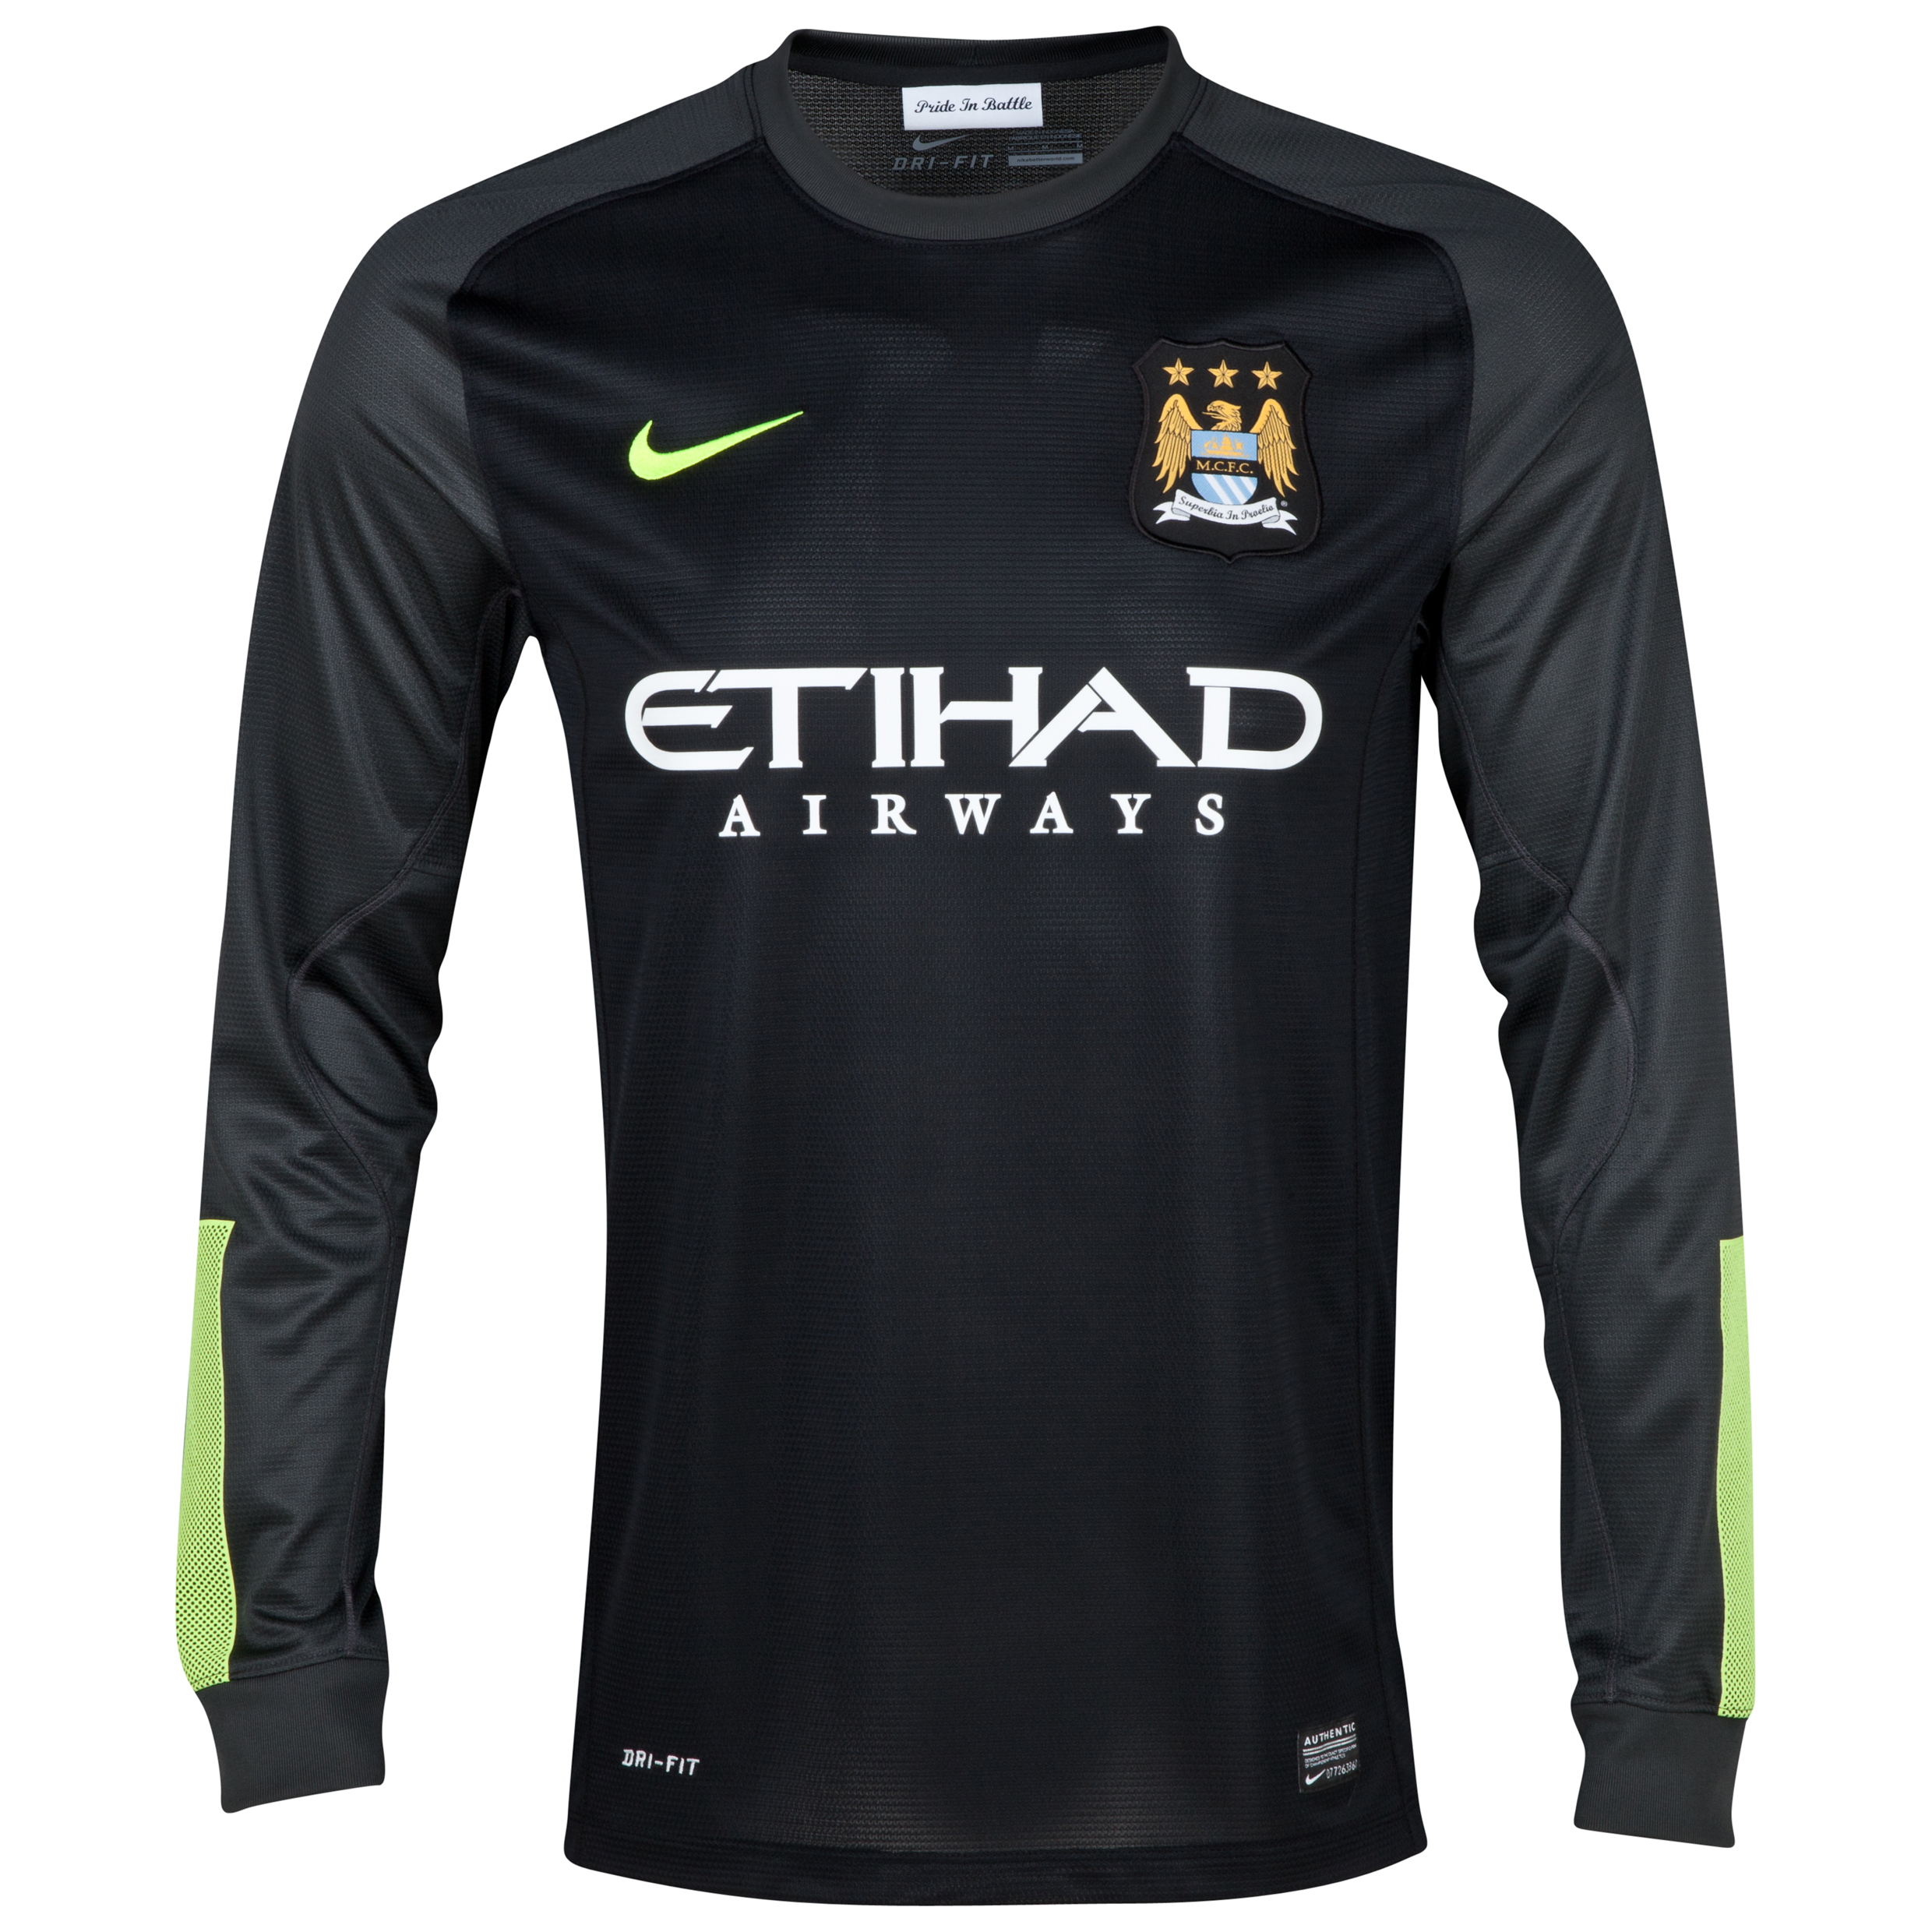 Manchester City Option 2 Goalkeeper Shirt 2013/14 - Black